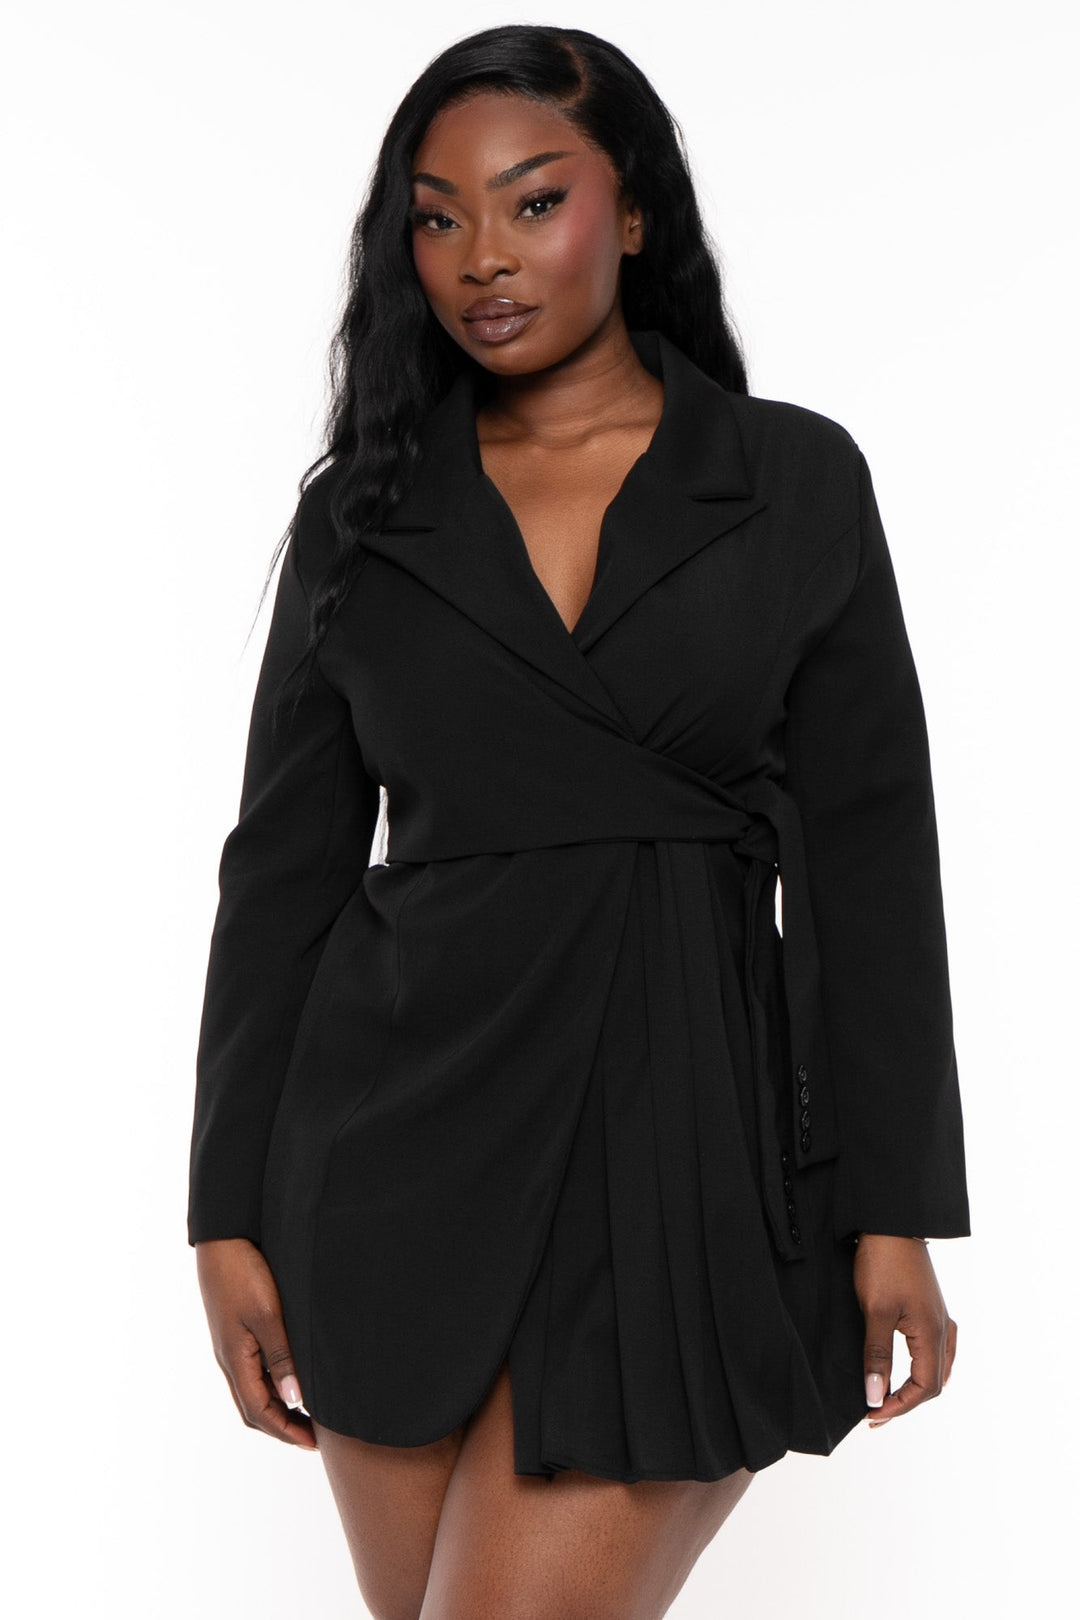 Goodtime USA Dresses Plus Size Like A Boss  Blazer  Dress- Black